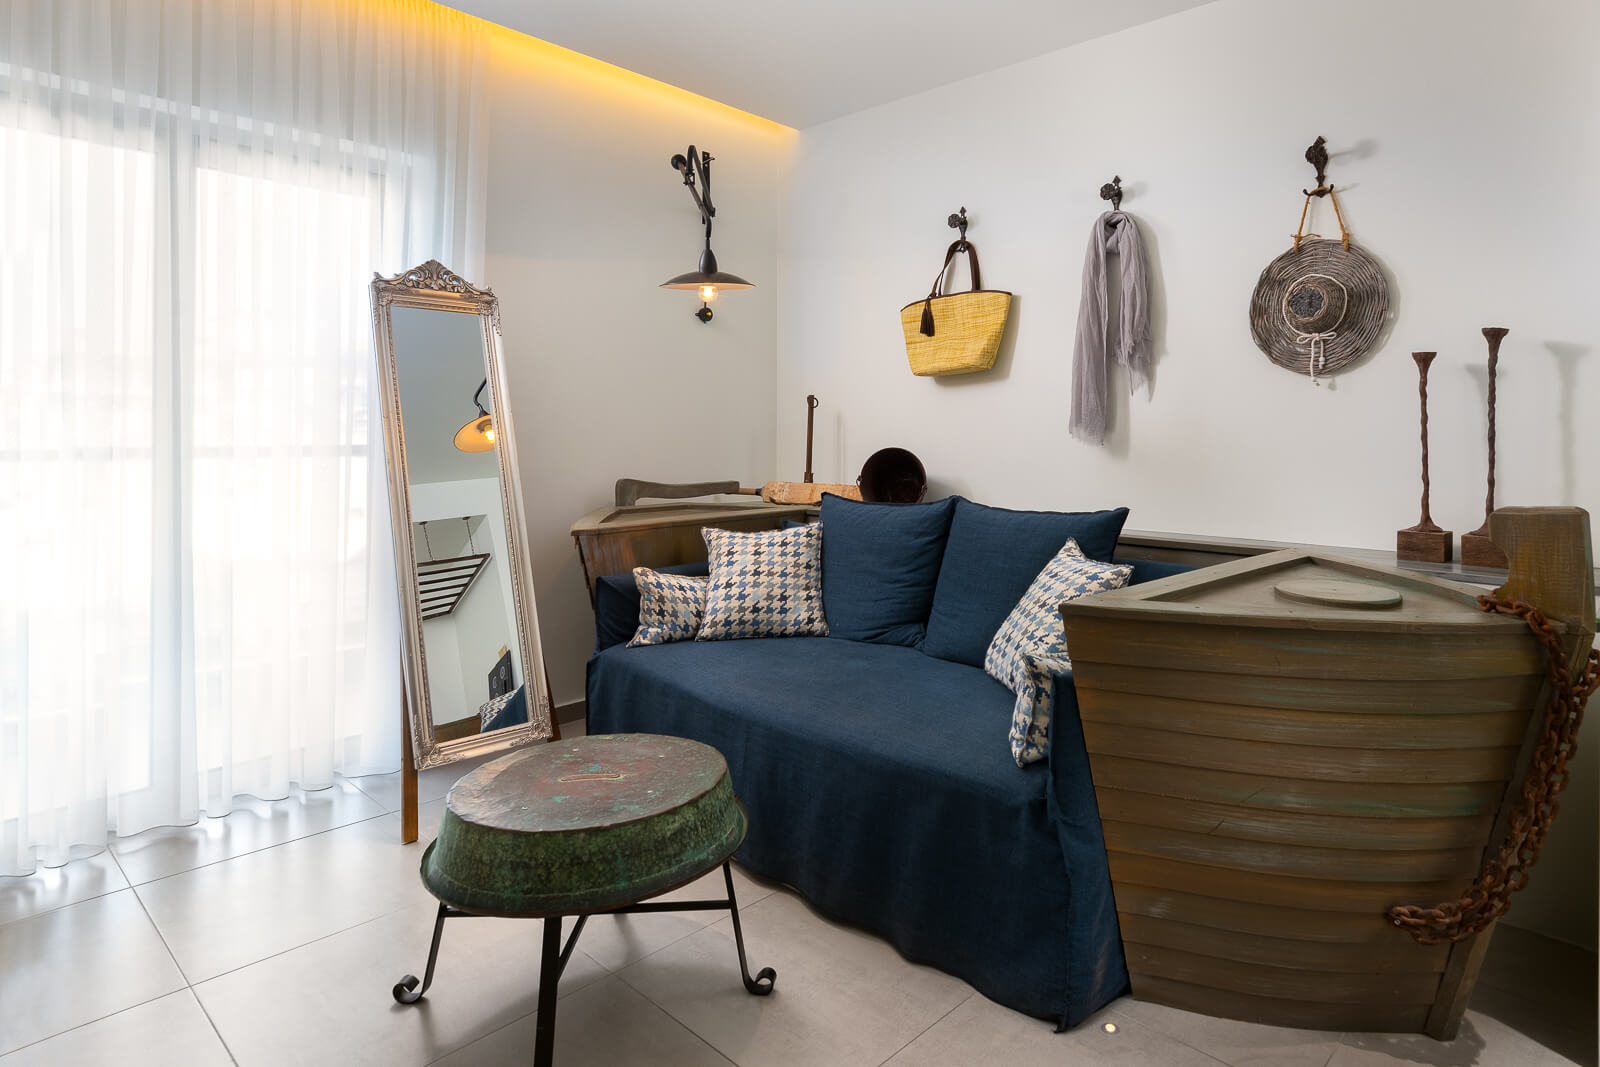 Kavos Living Room - Elakati Luxury Boutique Hotel in Rhodes